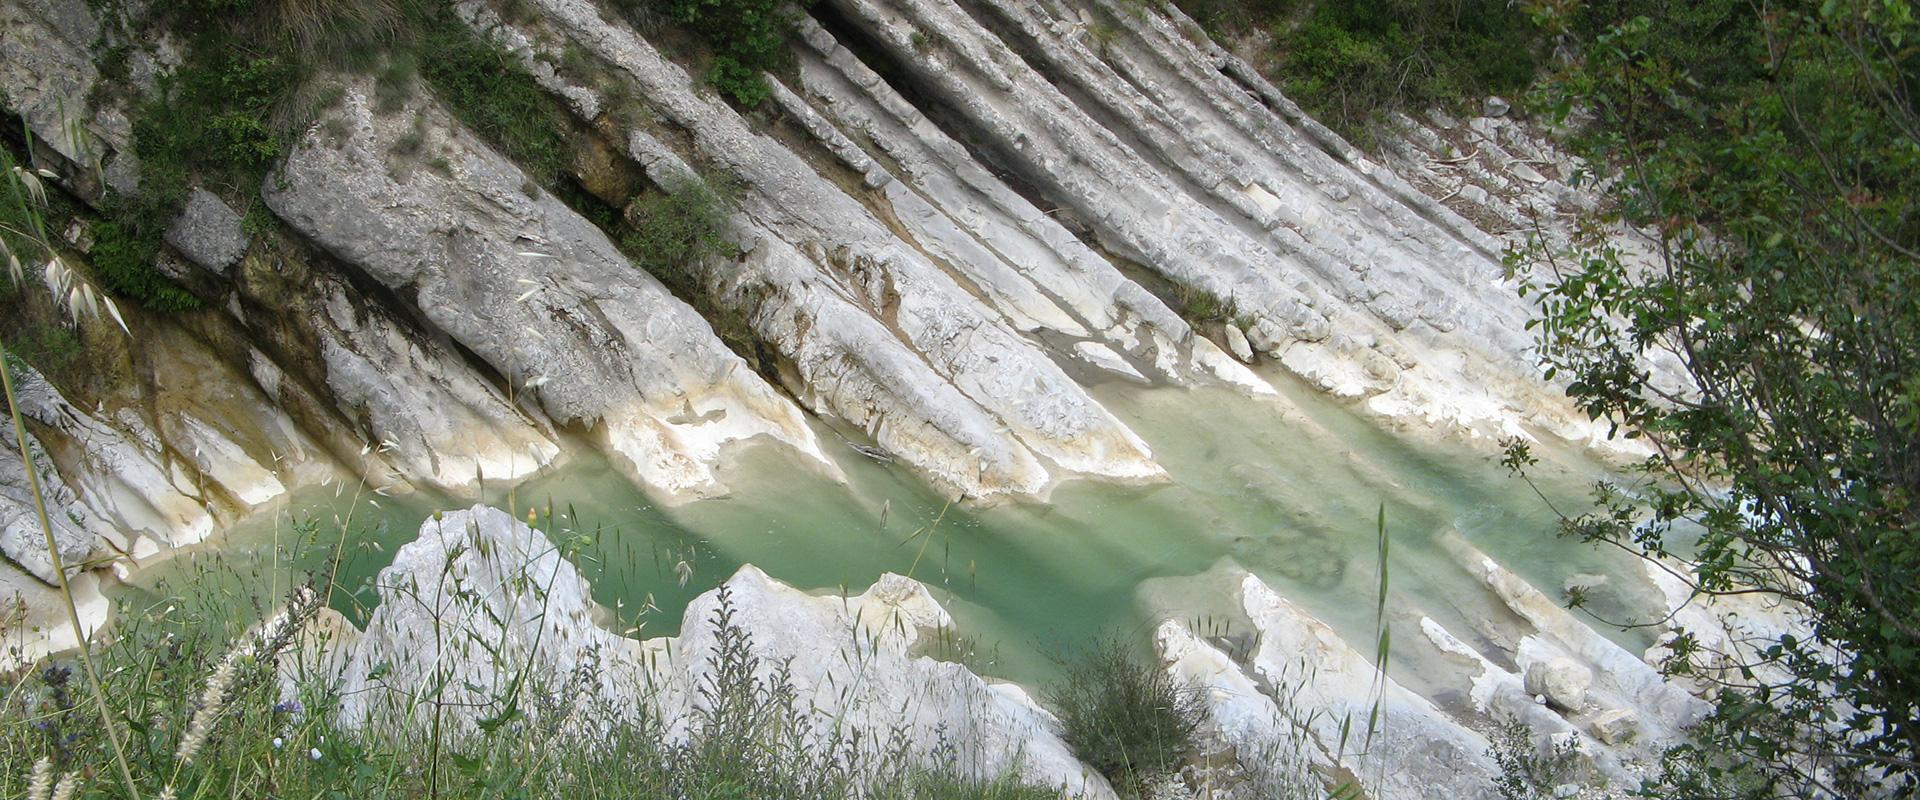 Limestone strata, Alpes-Maritimes